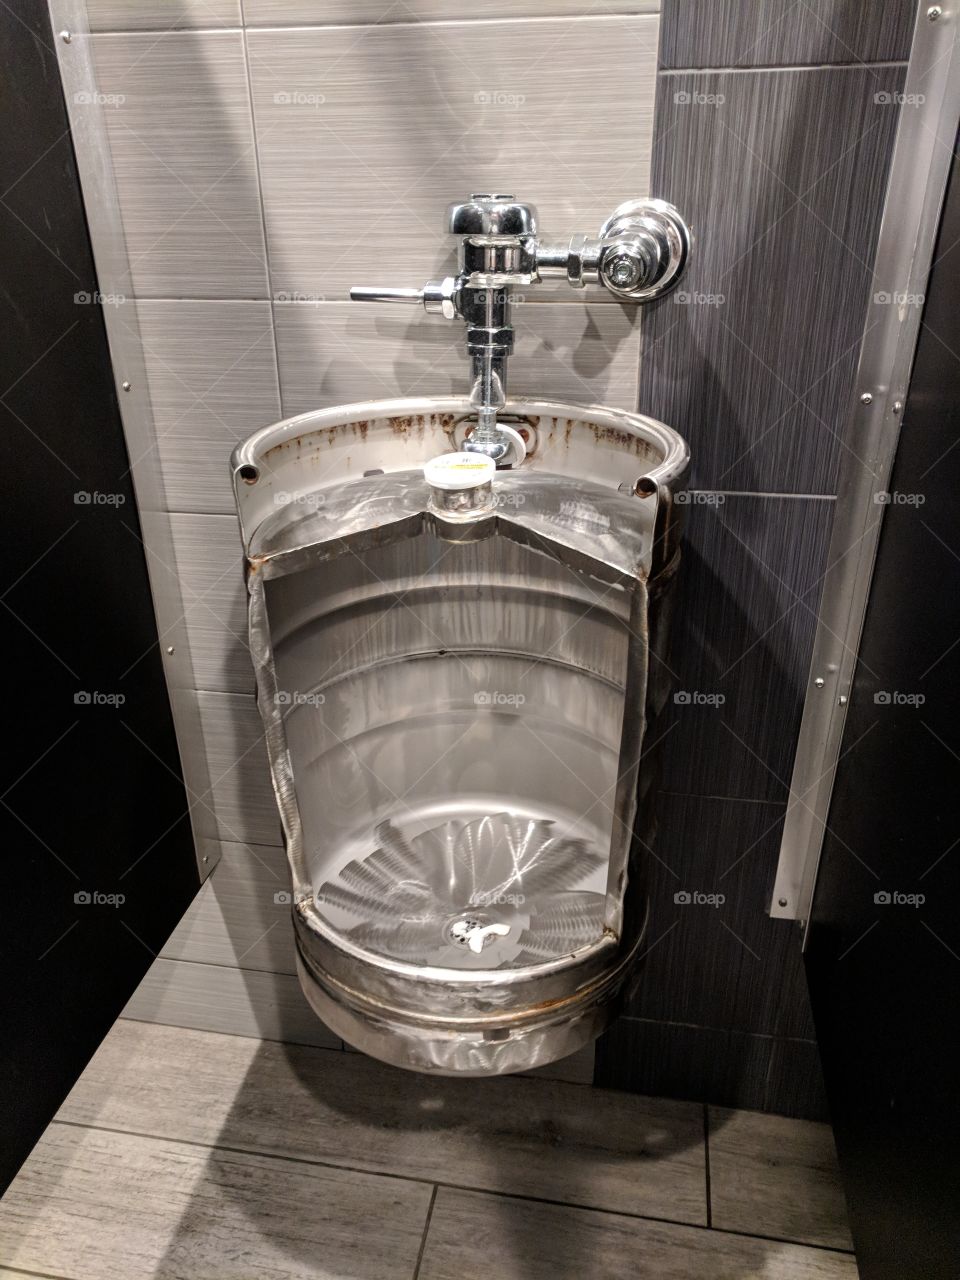 keg urinal bathroom at restaurant elixer